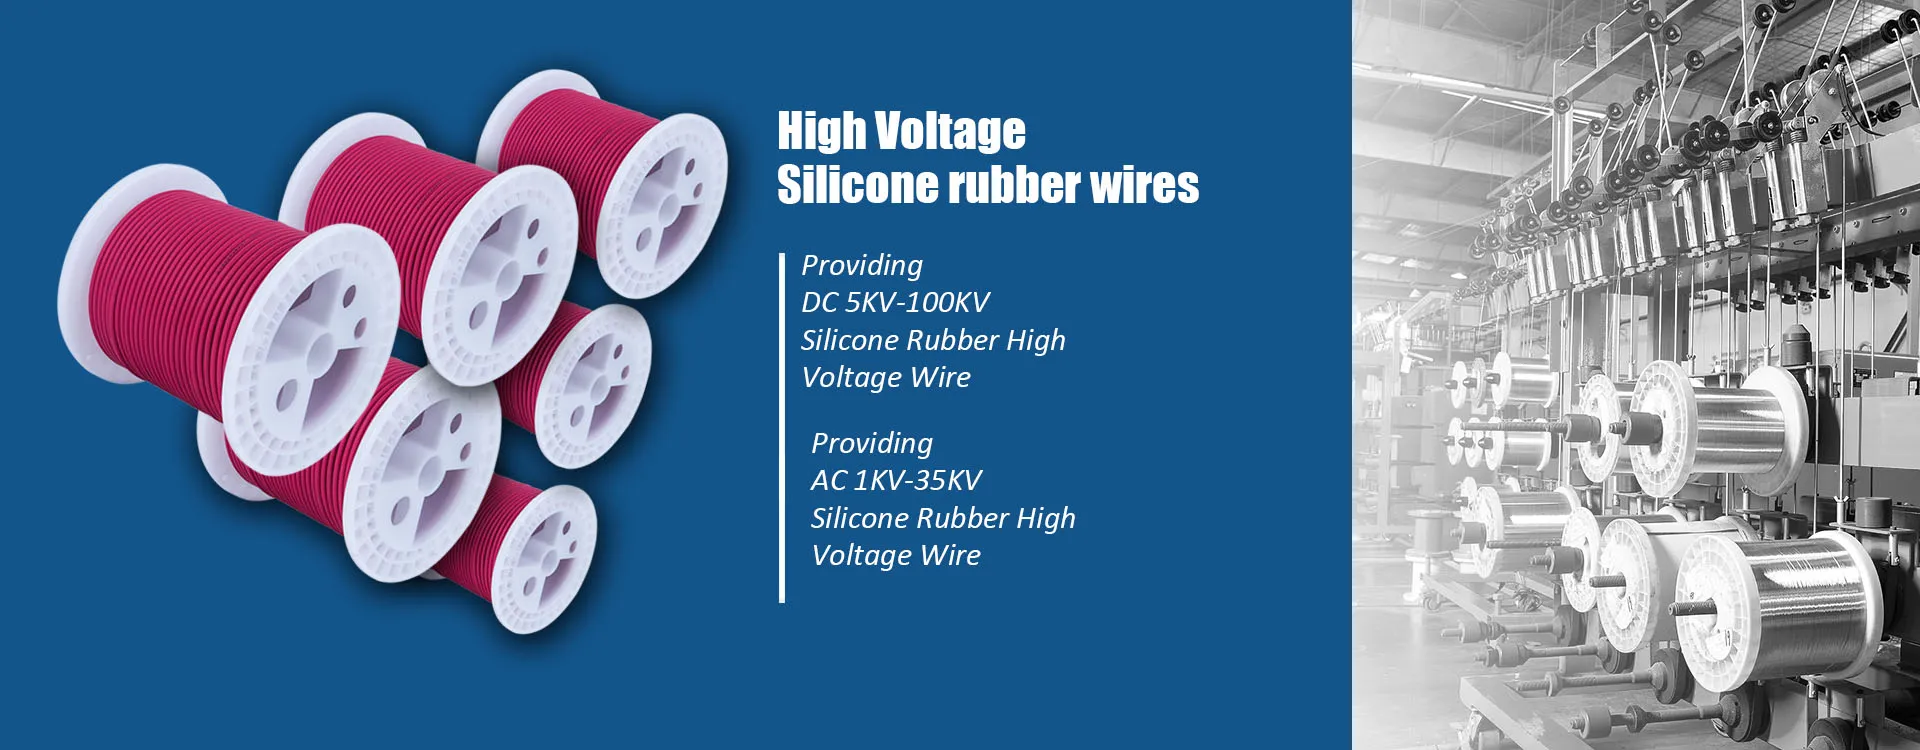 Silicone rubber high voltage wire